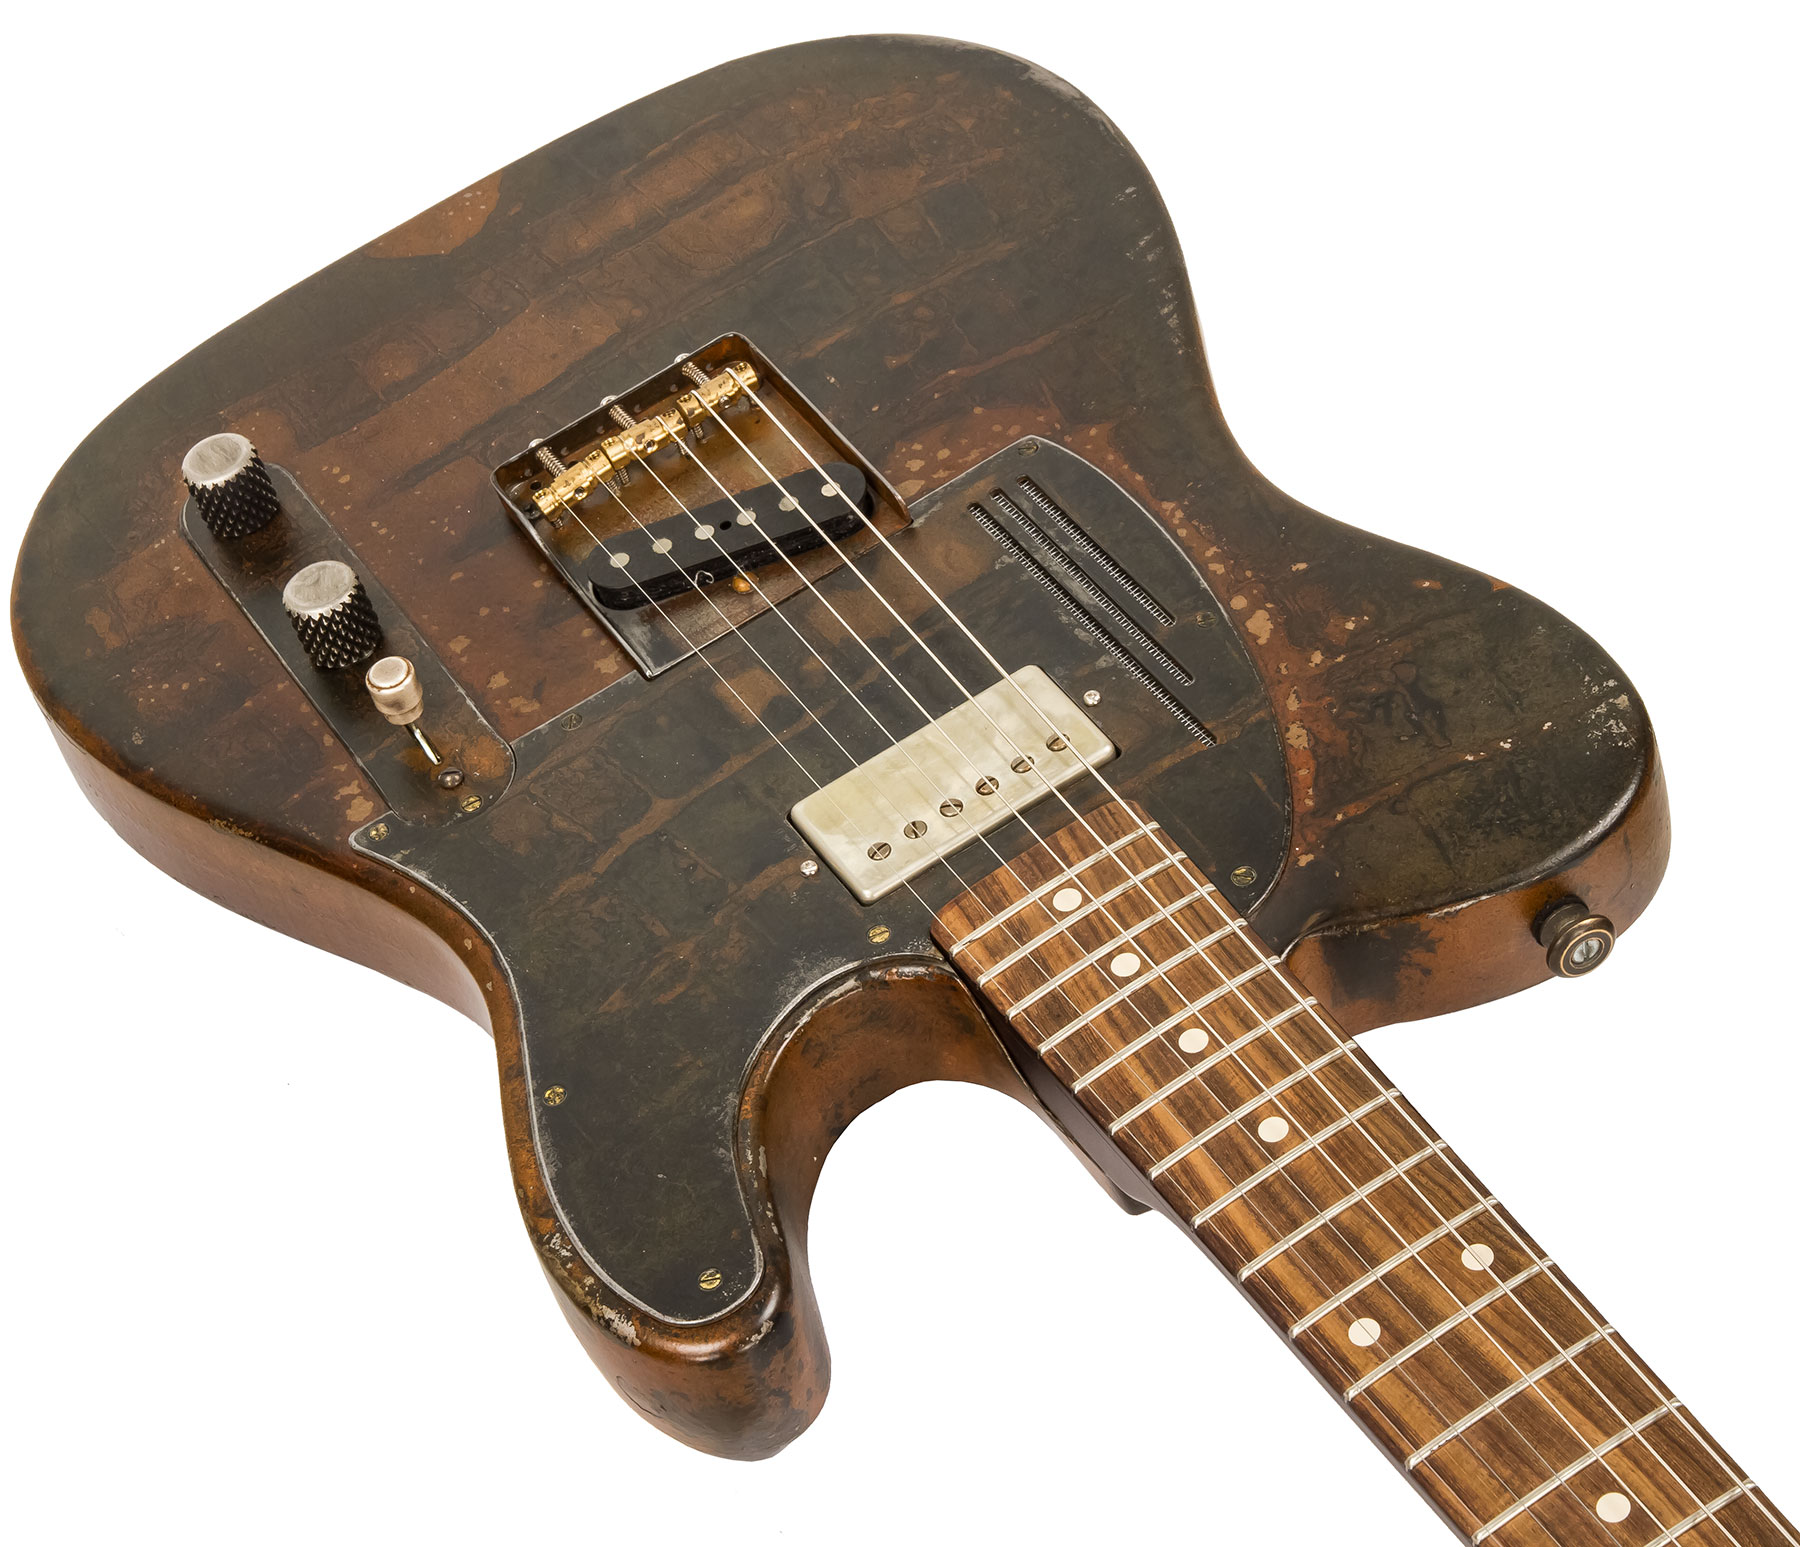 James Trussart Steelcaster Plain Back Sh Pf #20034 - Rust O Matic Gator - Semi hollow elektriche gitaar - Variation 2